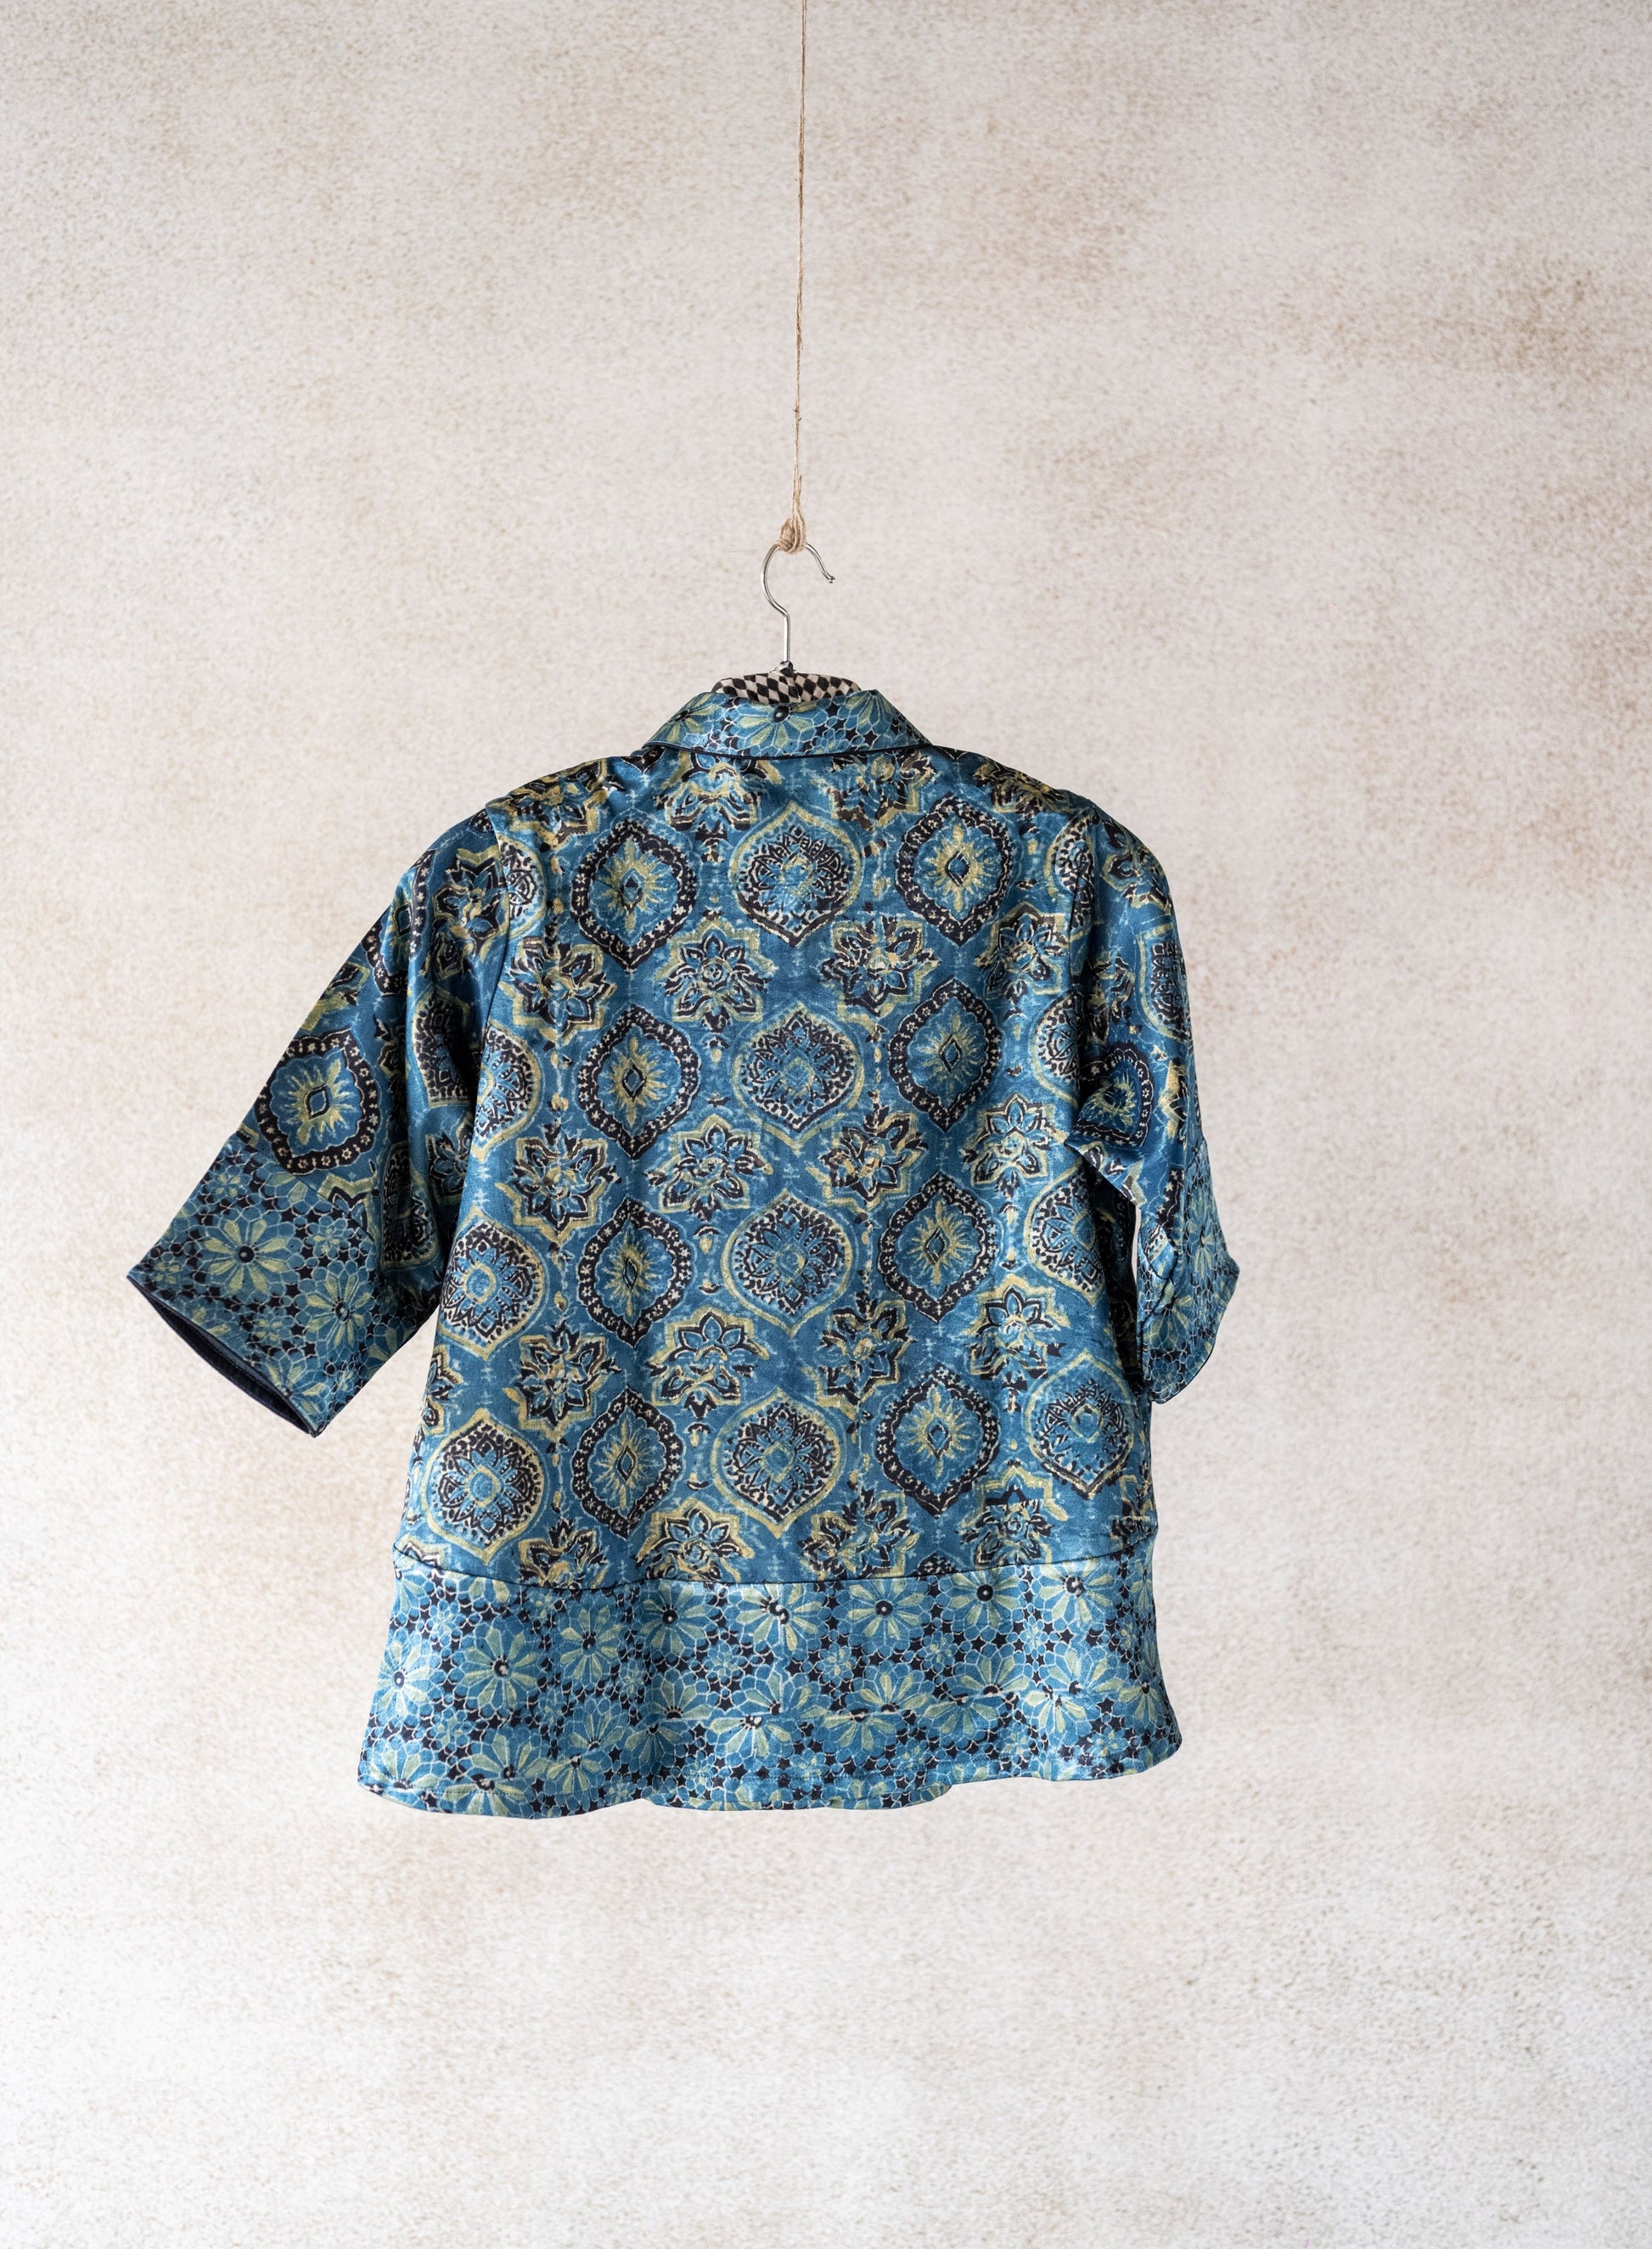 Indigo dyed ajrakh modal silk shirt, Conscious fashion